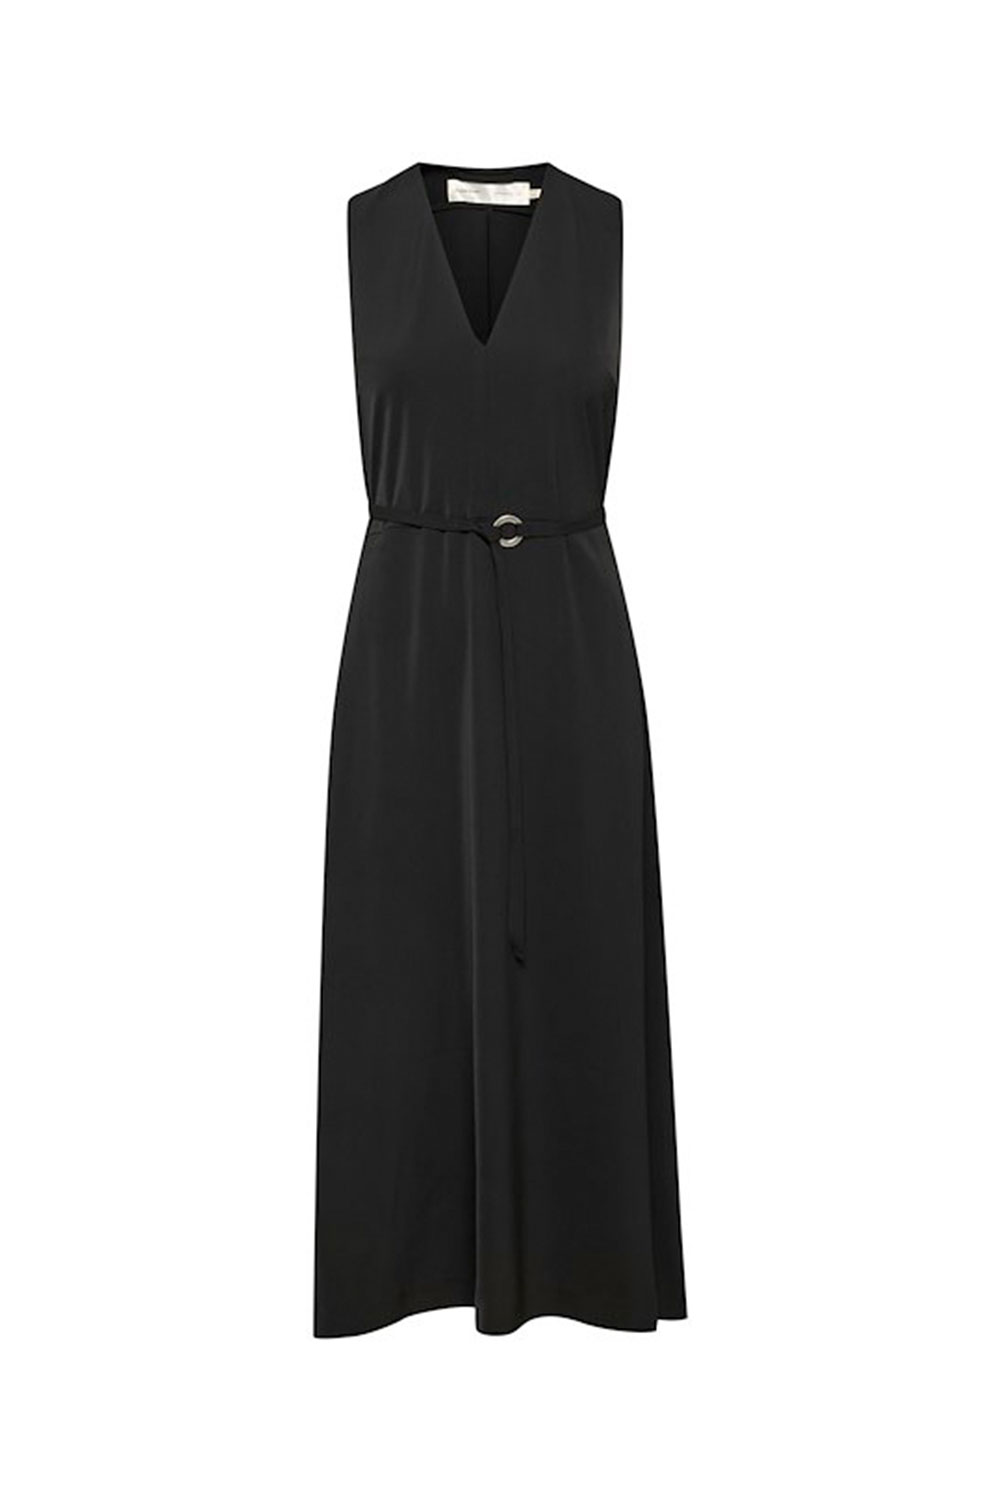 InWear : Black Sleeveless Padia Maxi Dress - jojo Boutique